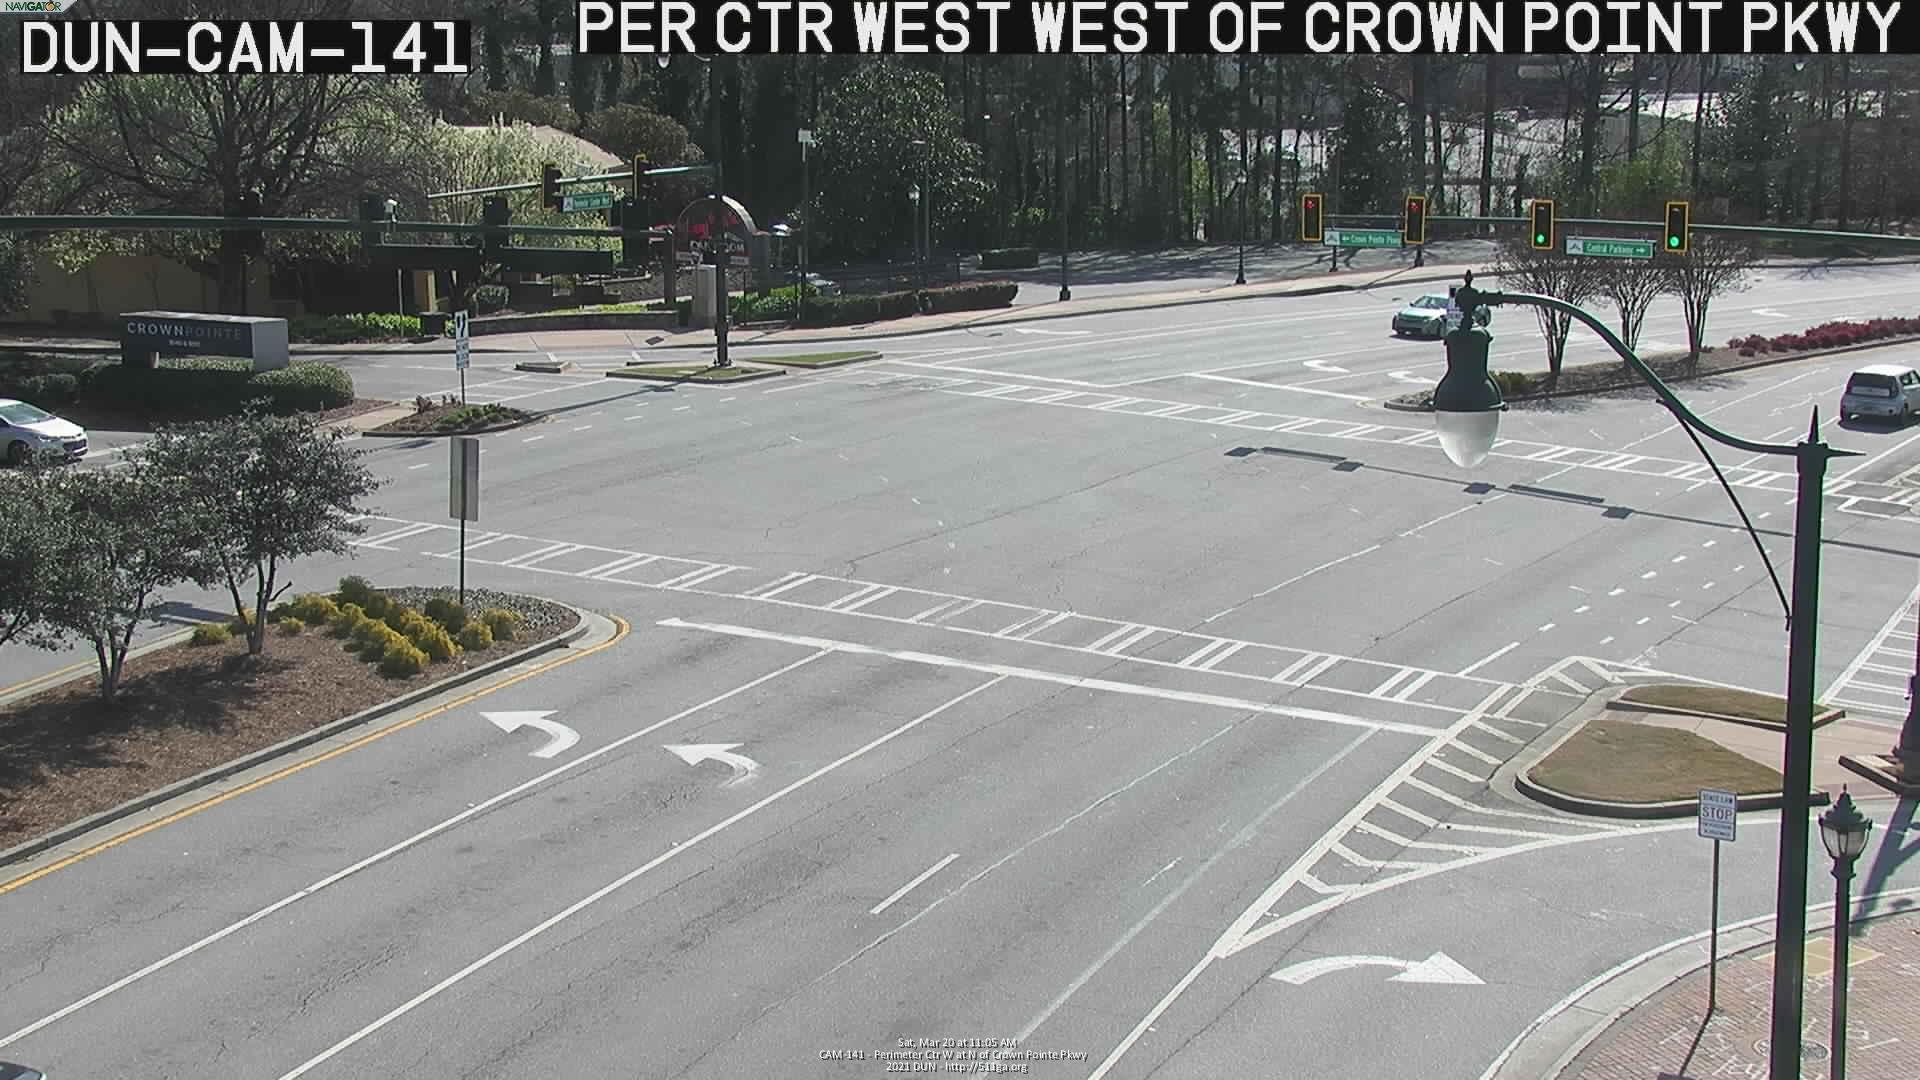 Perimeter Center West : N of Crown Pointe Pkwy CCTV (N) (32623) - USA